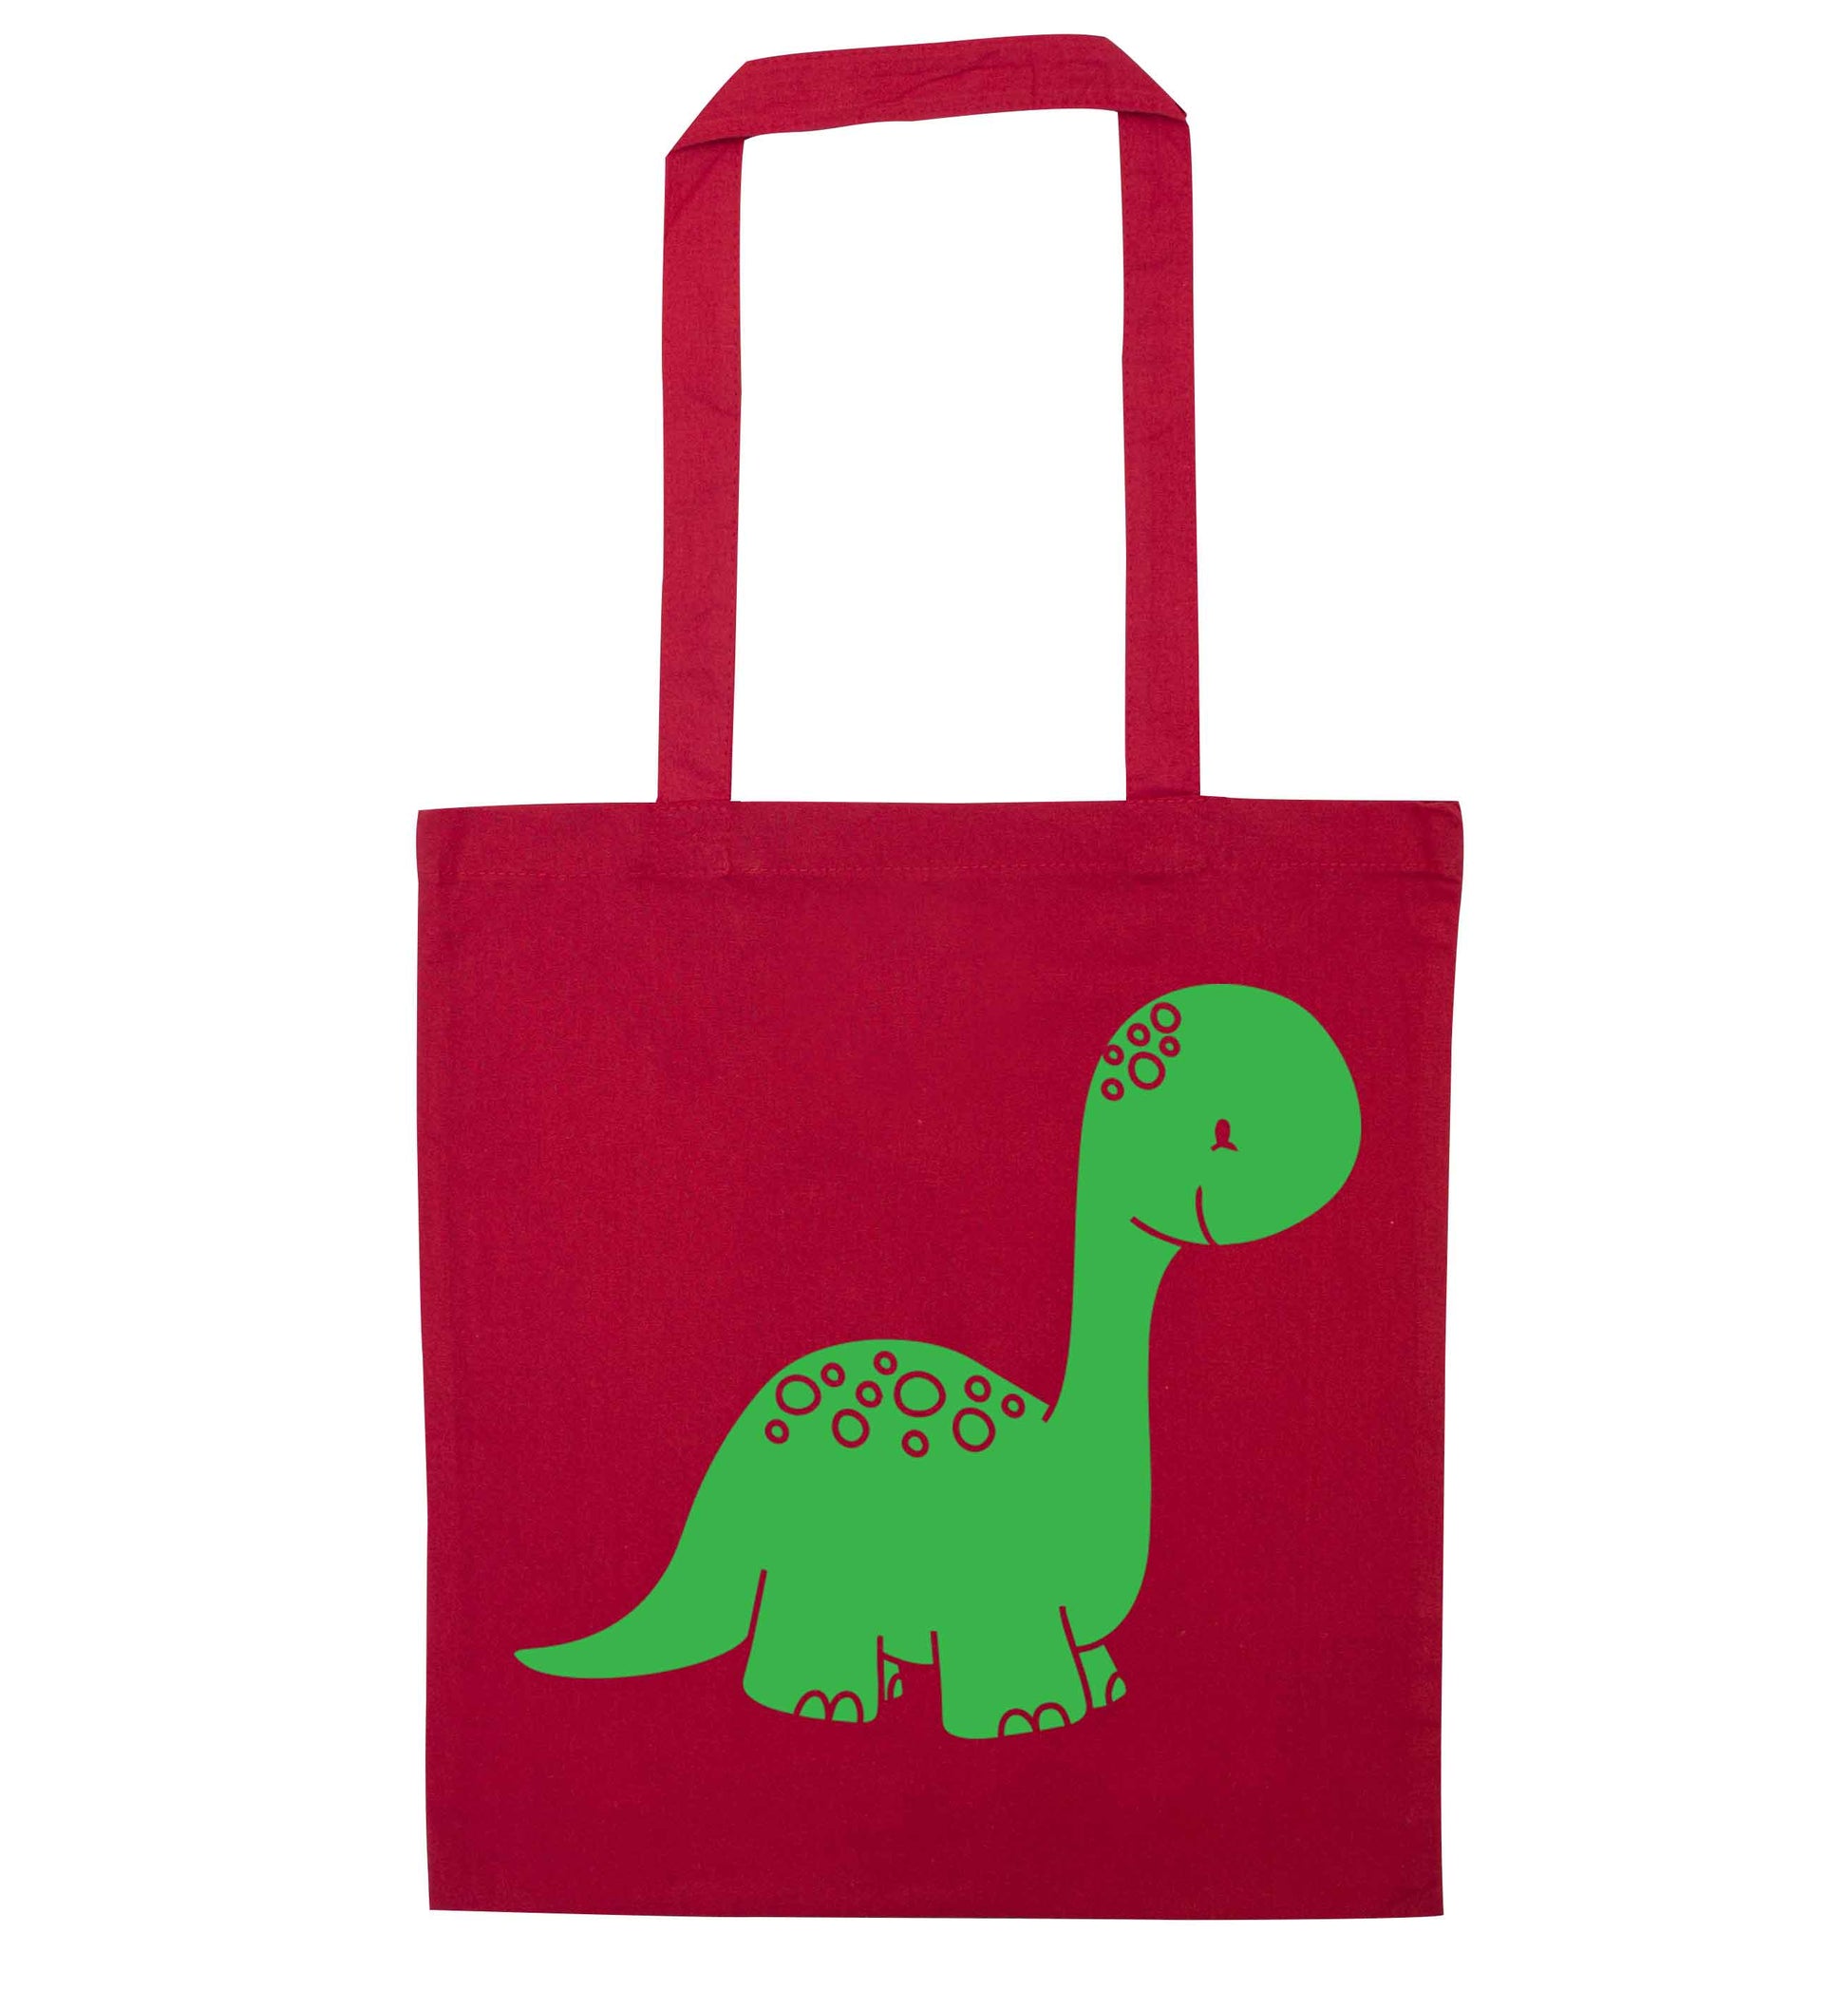 Dinosaur illustration red tote bag